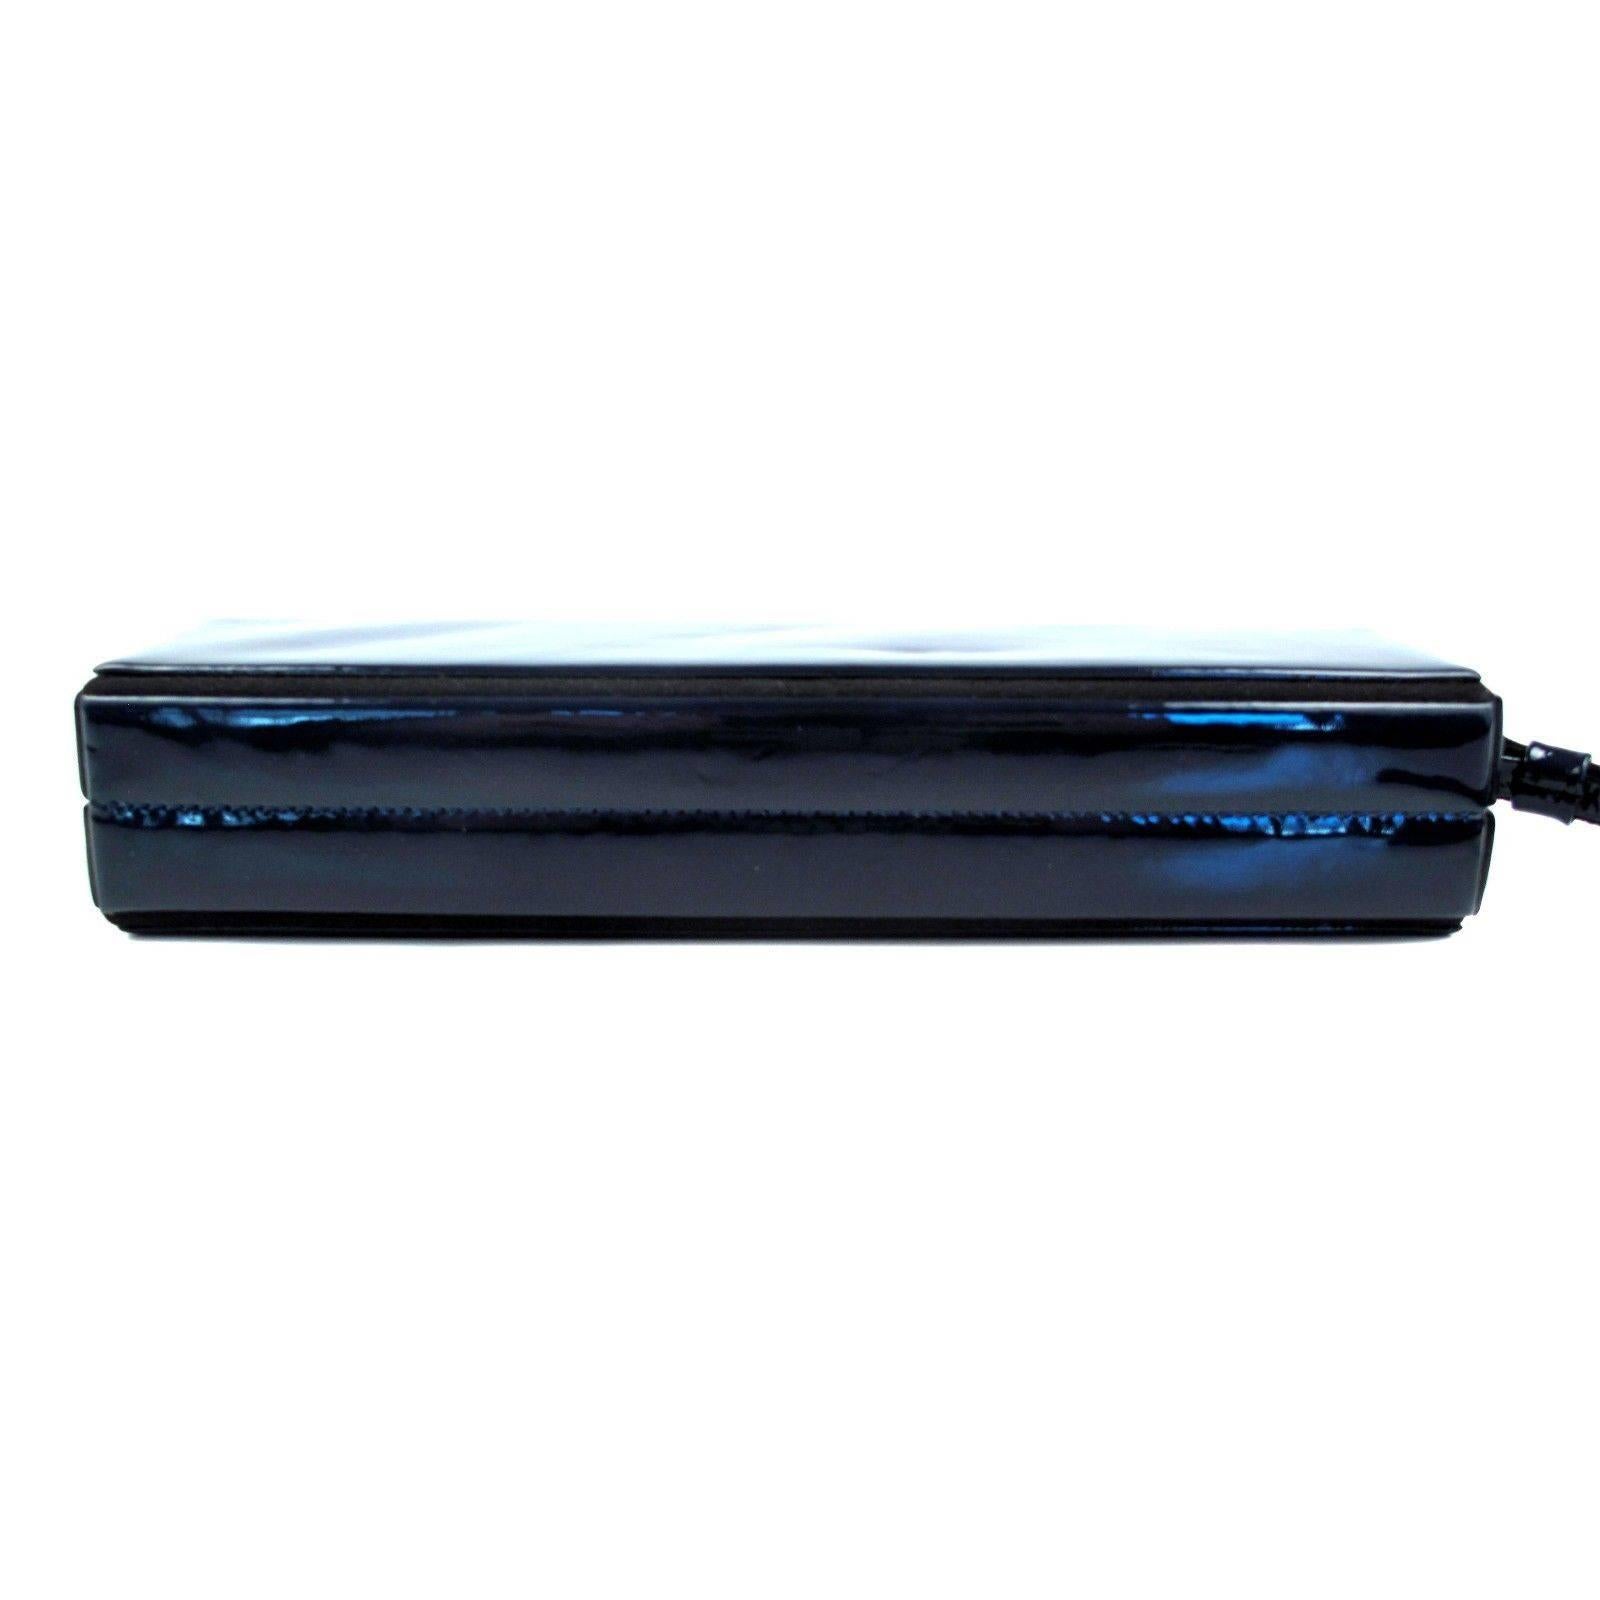 Chanel Clutch Box - Wristlet Blue & Black Leather CC Minaudie Bag Handbag Case 2